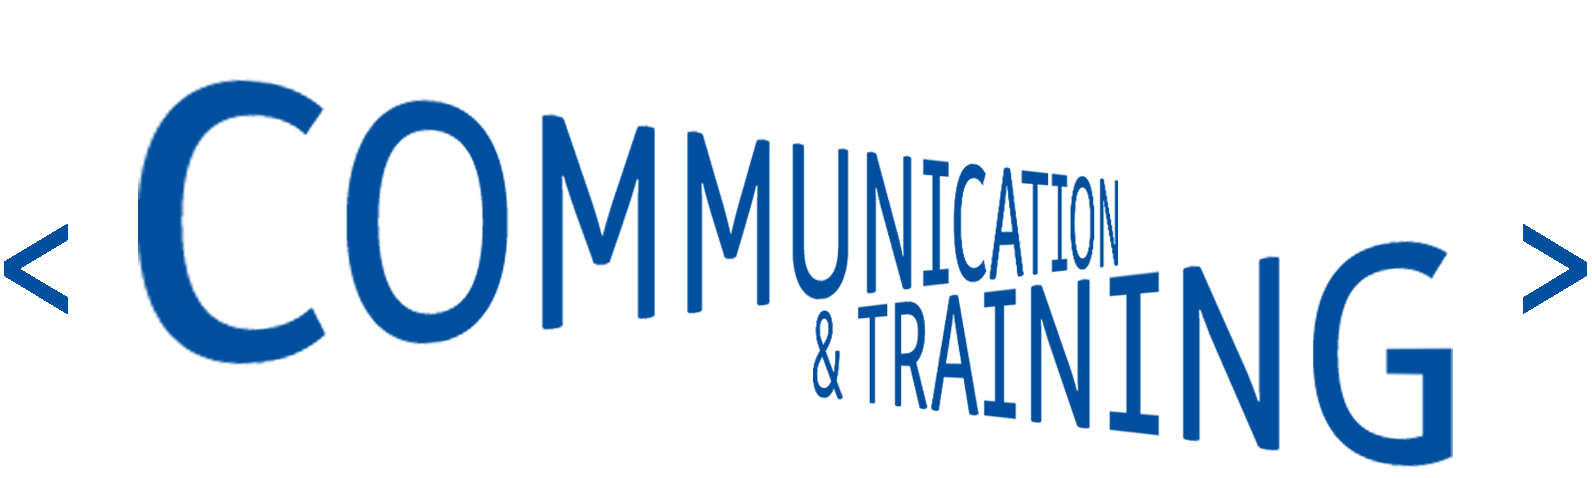 communication and training